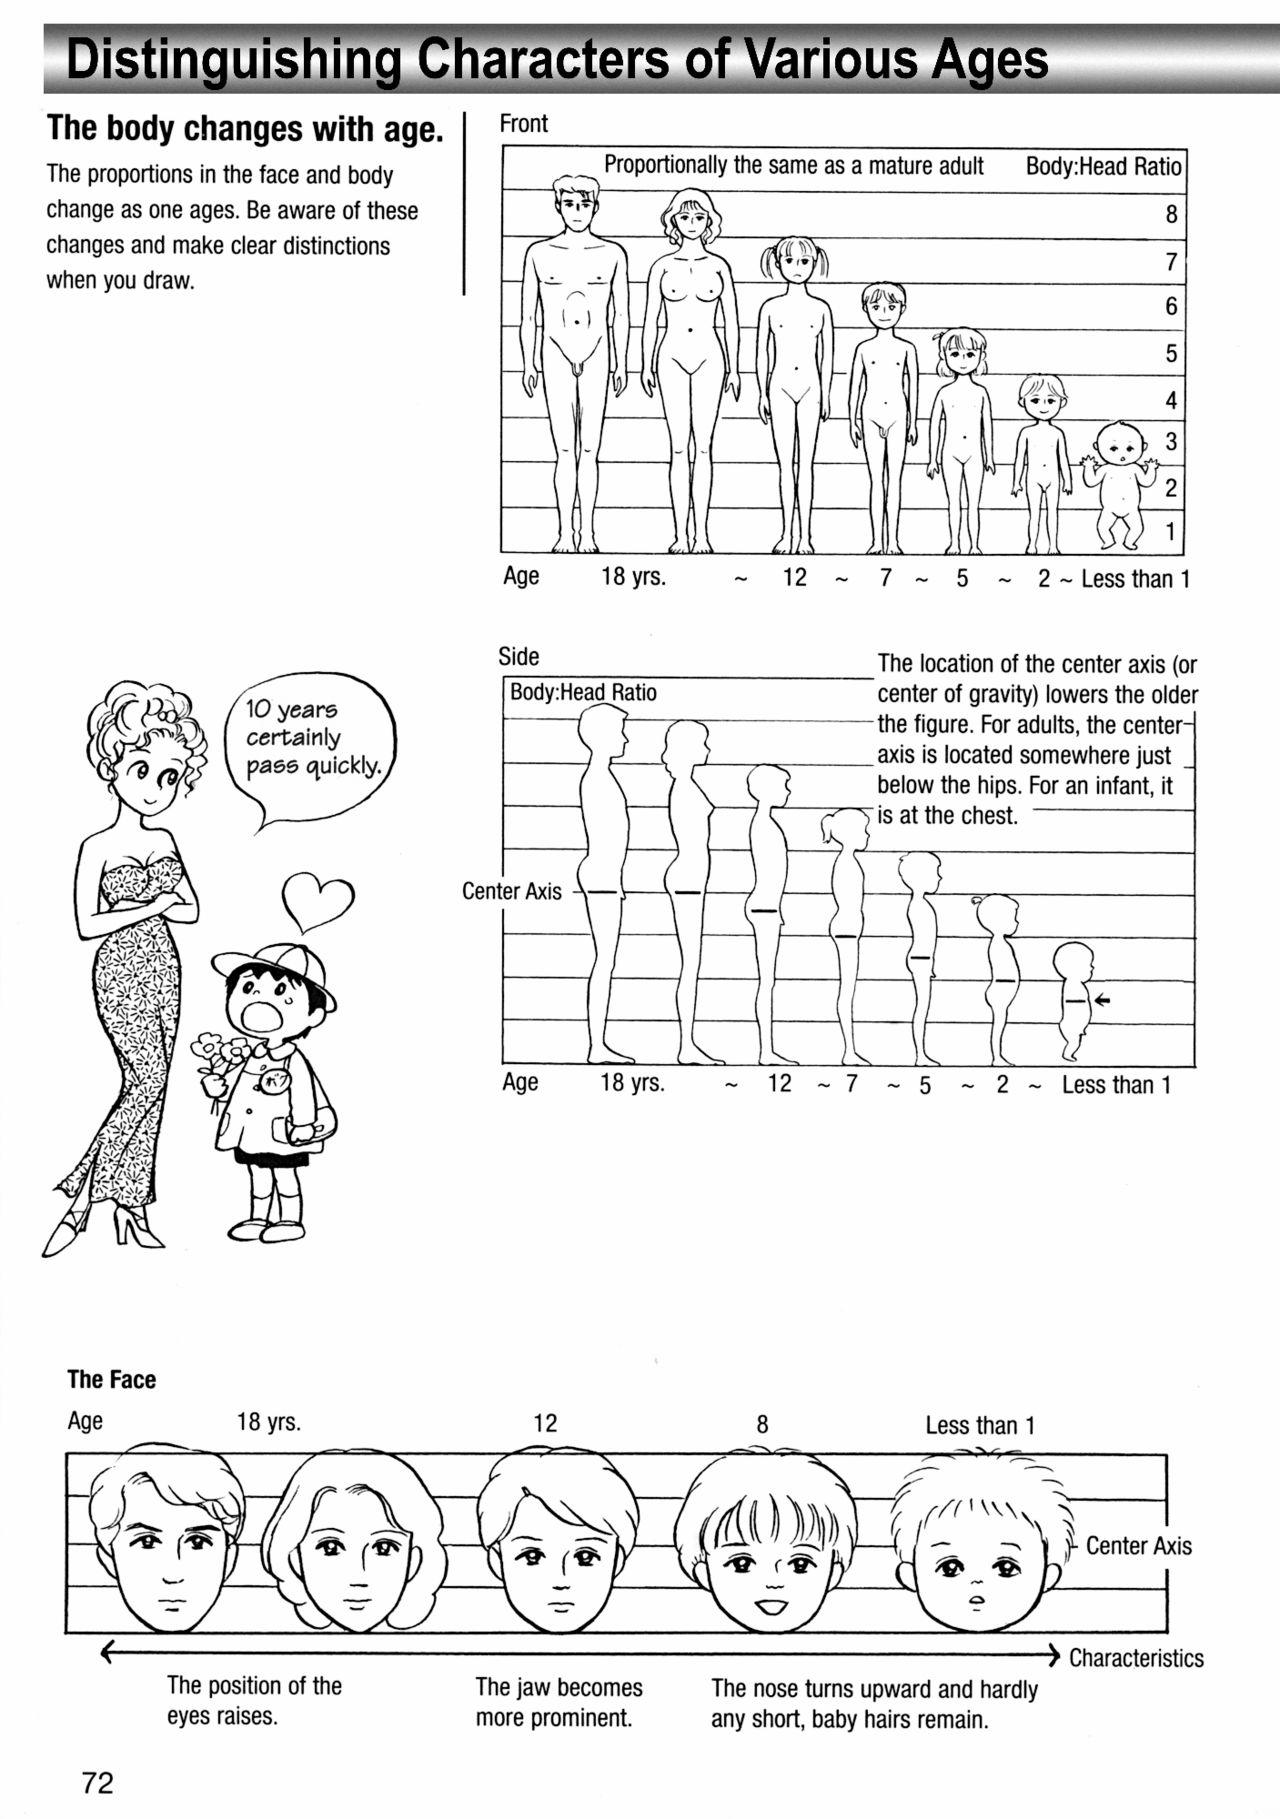 How to Draw Manga Vol. 8 - Super Basics by Angel Matsumoto 76